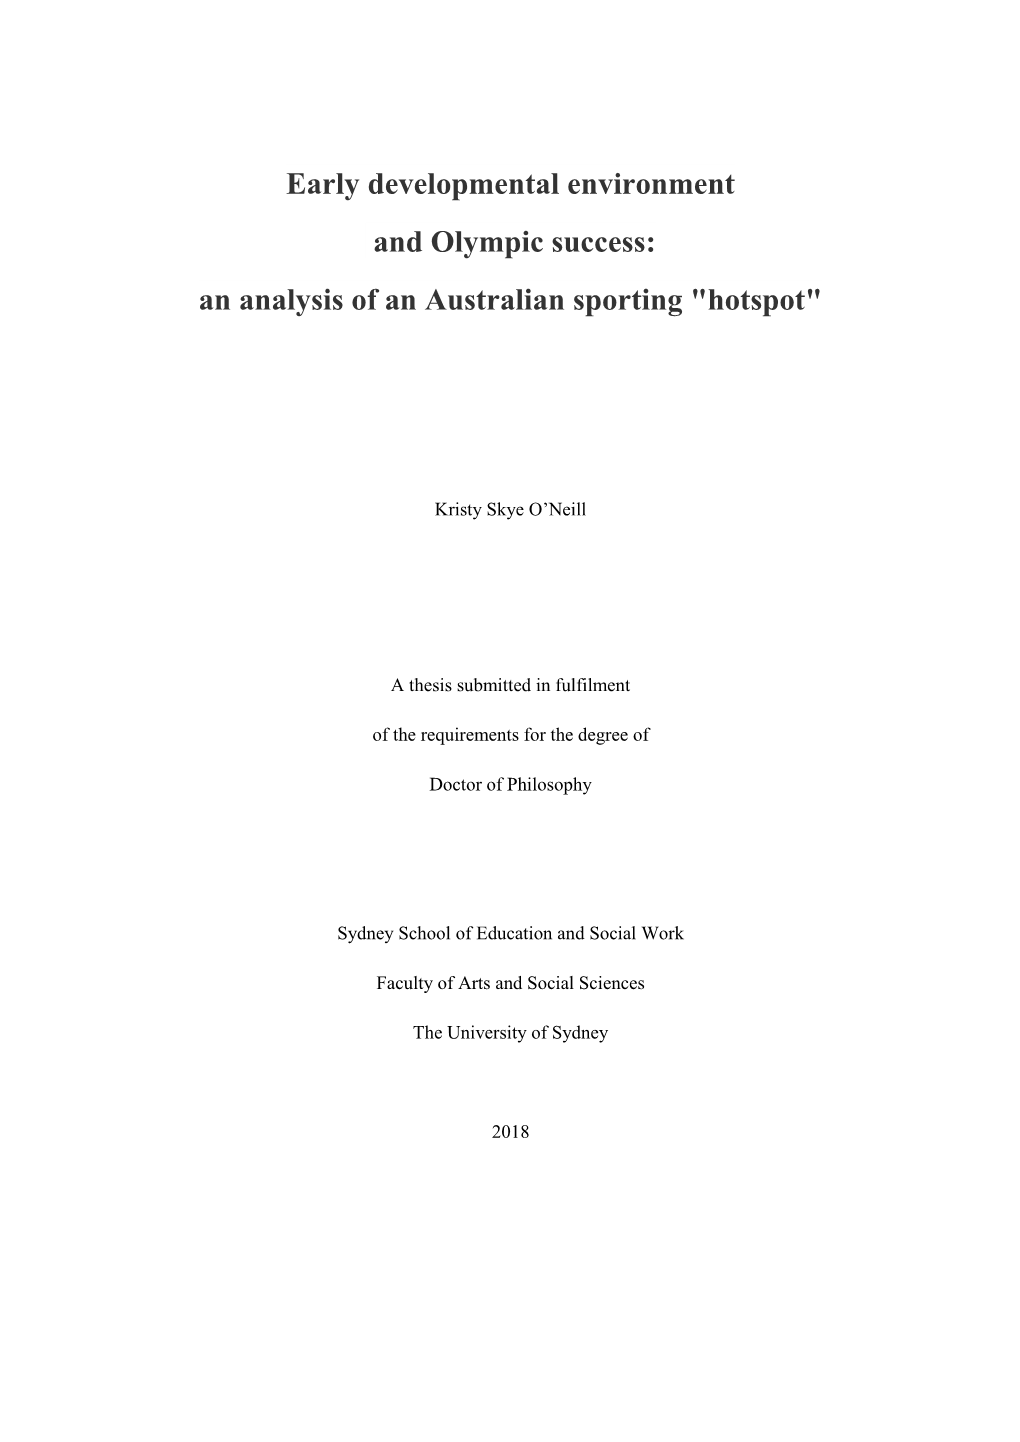 Early Developmental Environment and Olympic Success: an Analysis of an Australian Sporting "Hotspot"